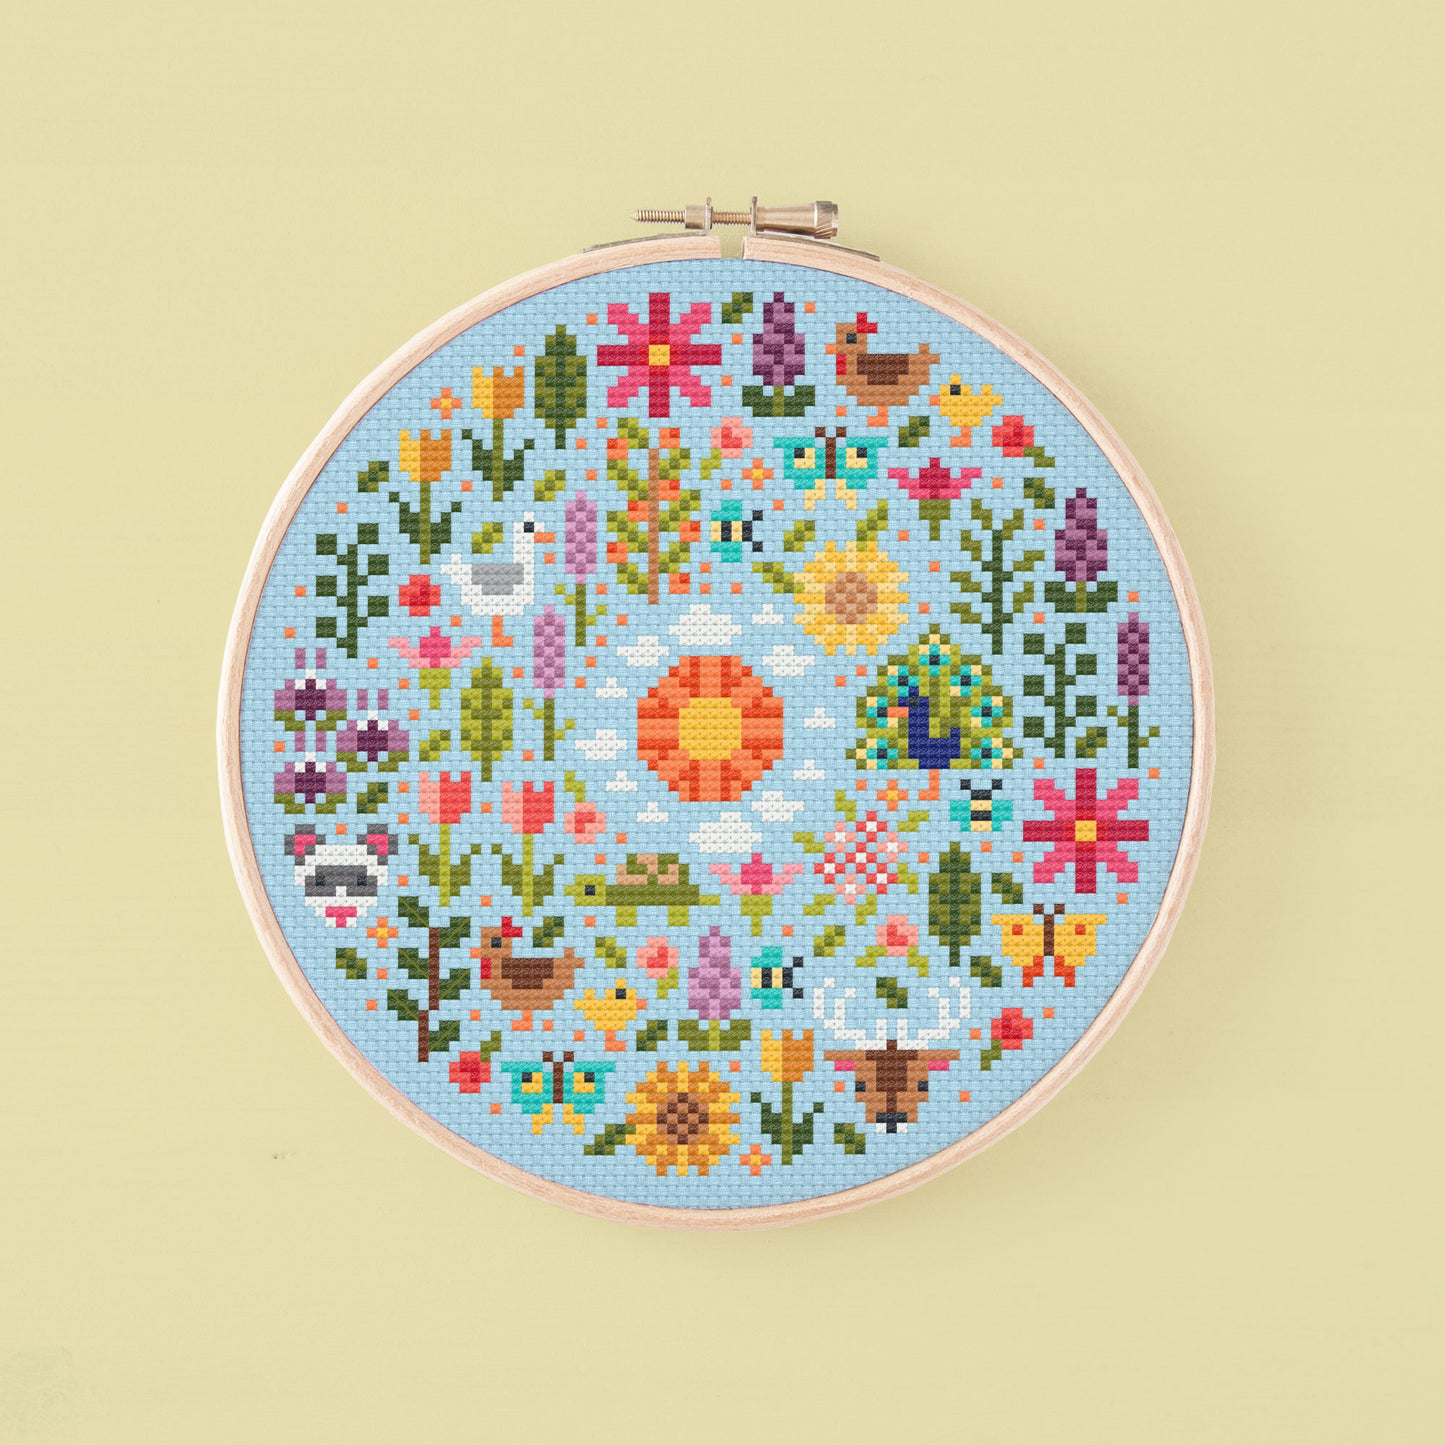 Mini Rainbow Garden - Cross Stitch Kit – unabuenapieza